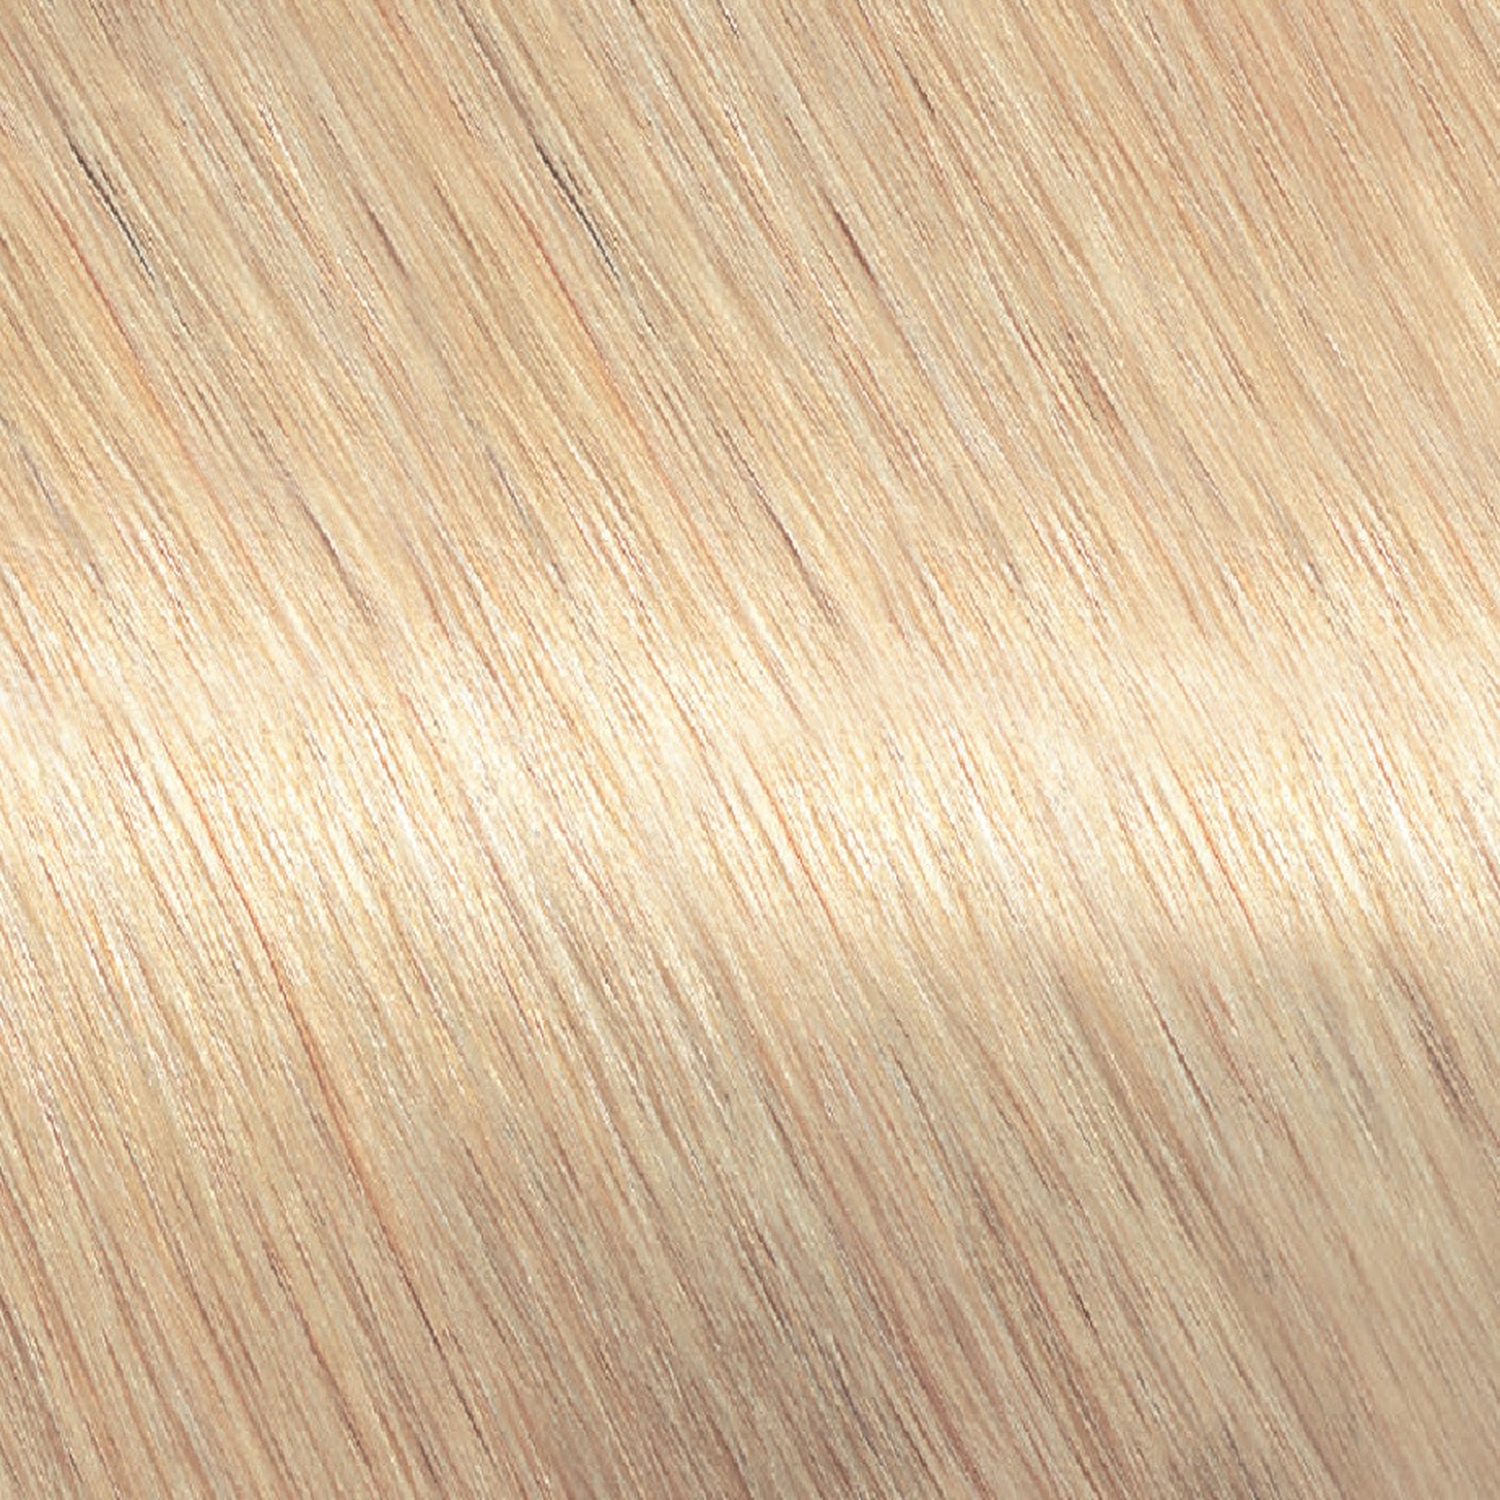 Ультра блонд чистый бриллиант краска для волос